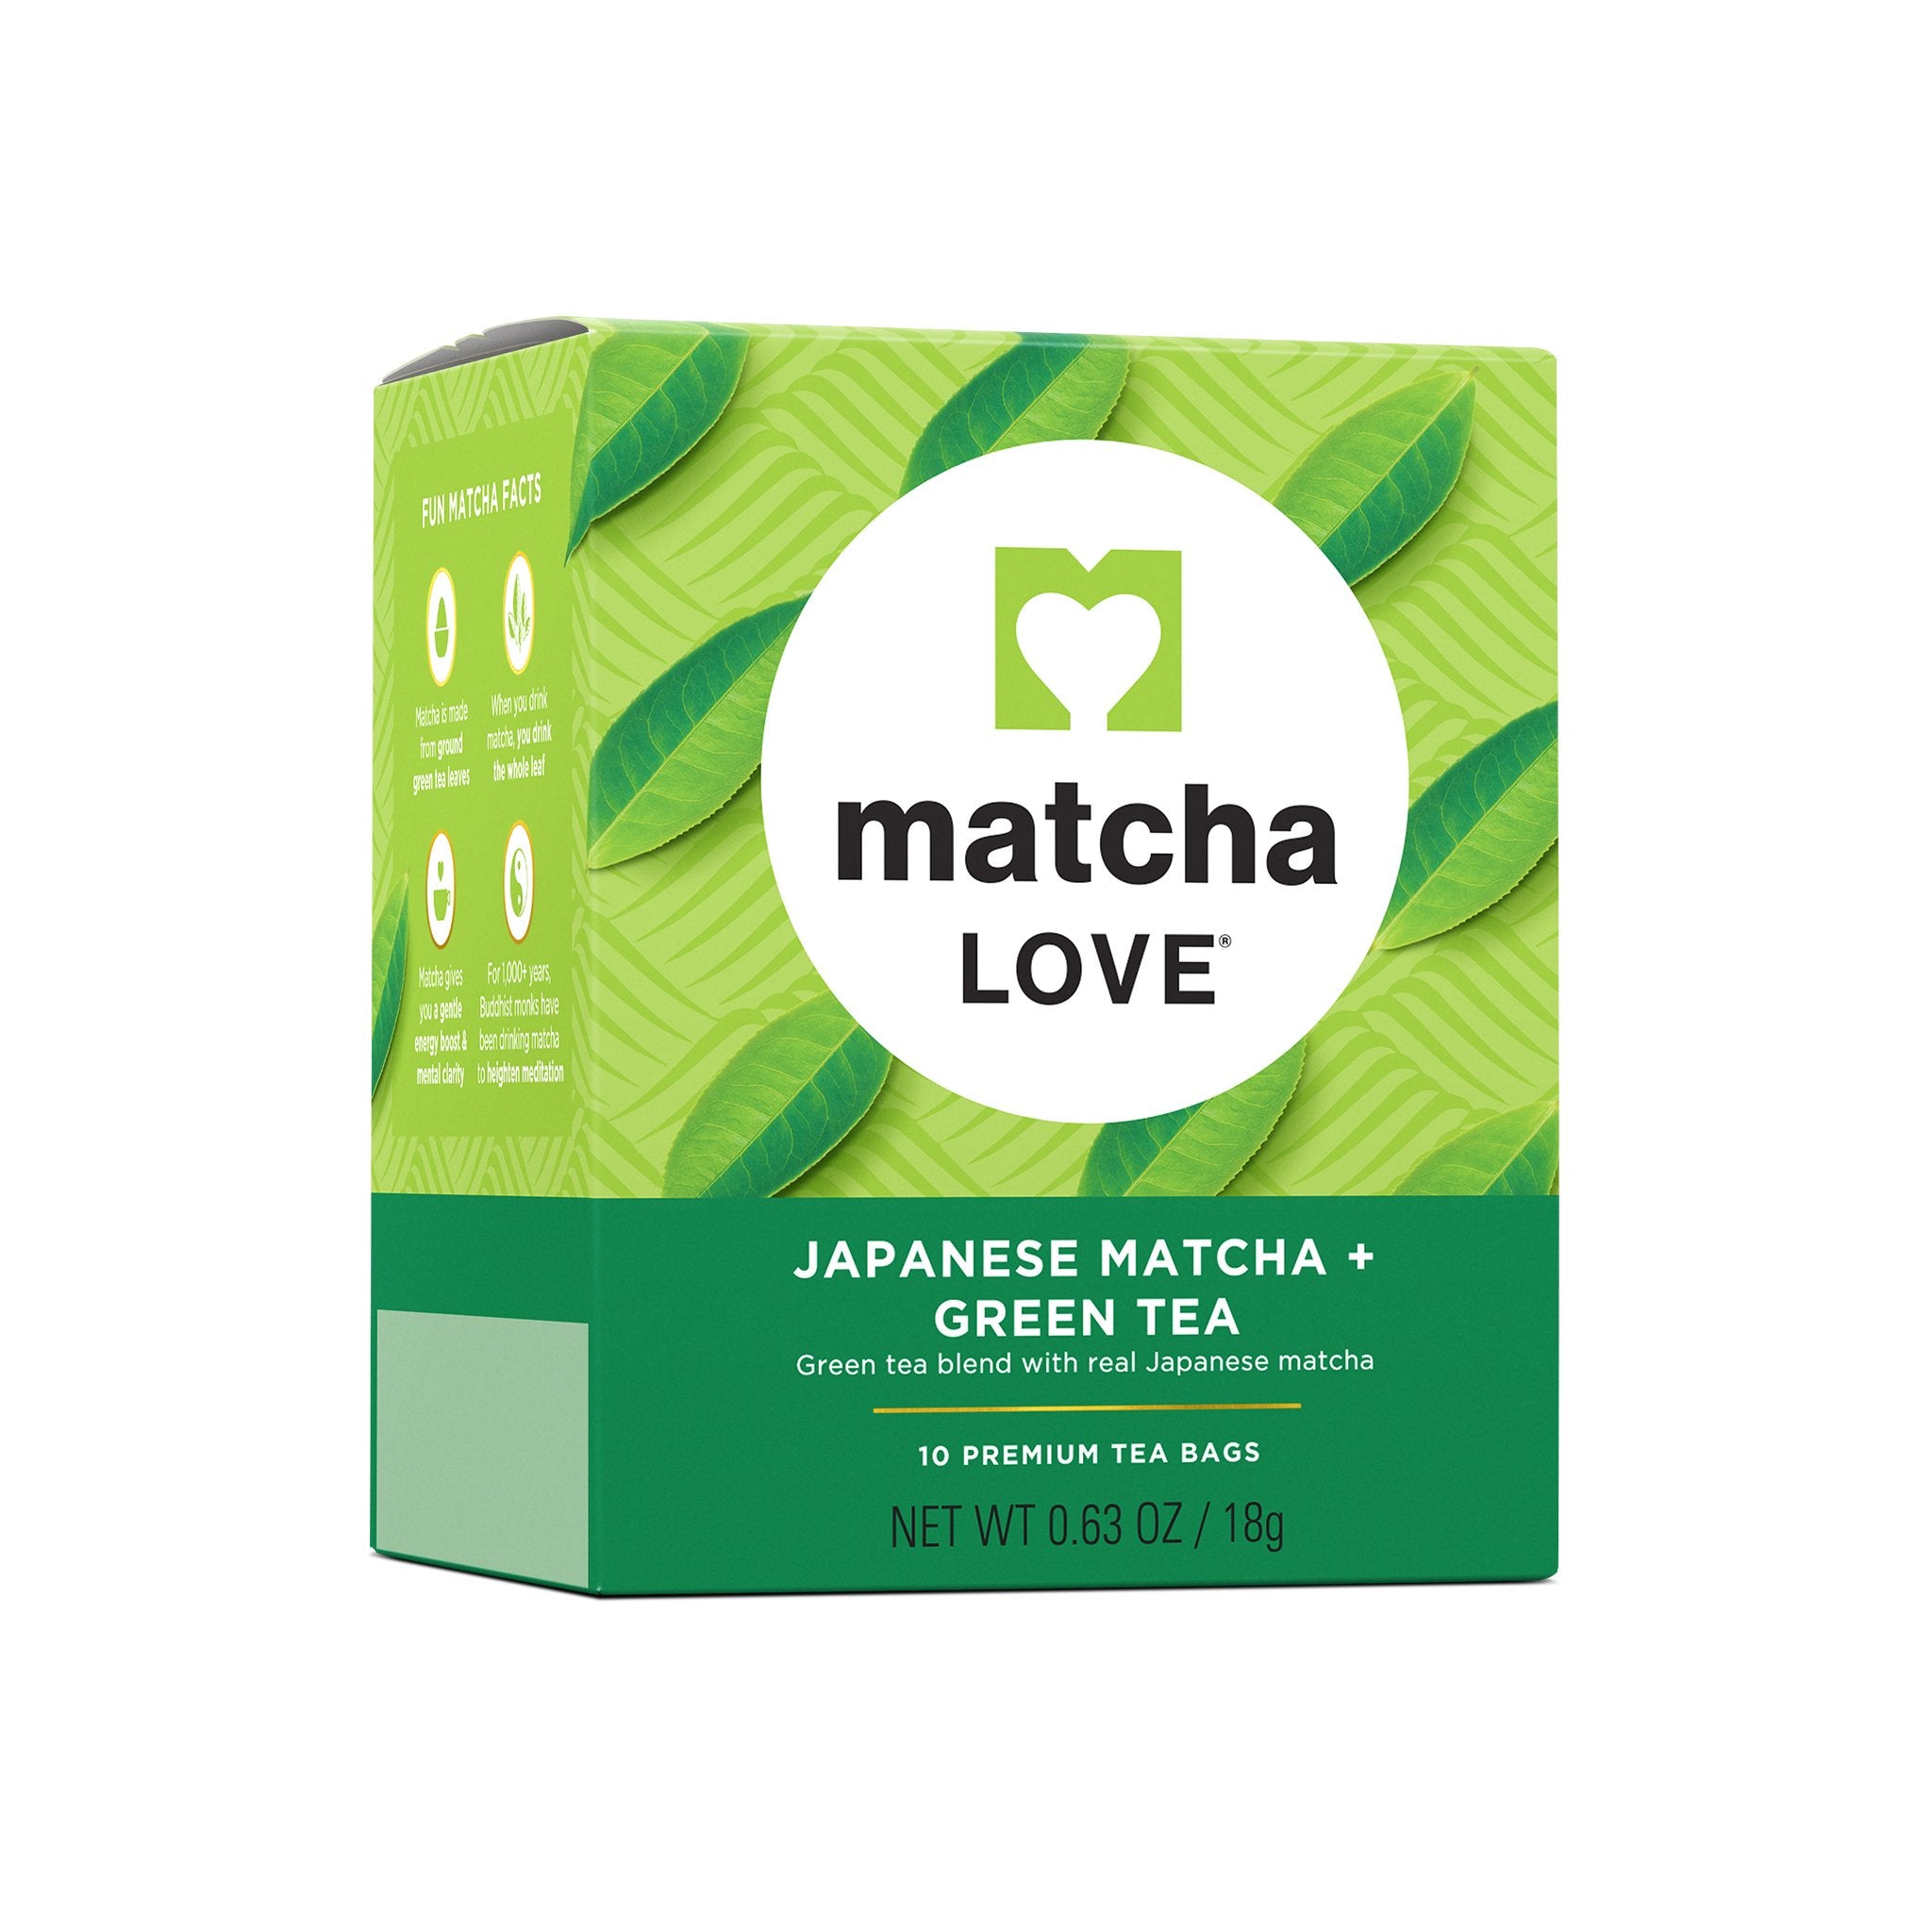 Japanese Matcha + Green Tea